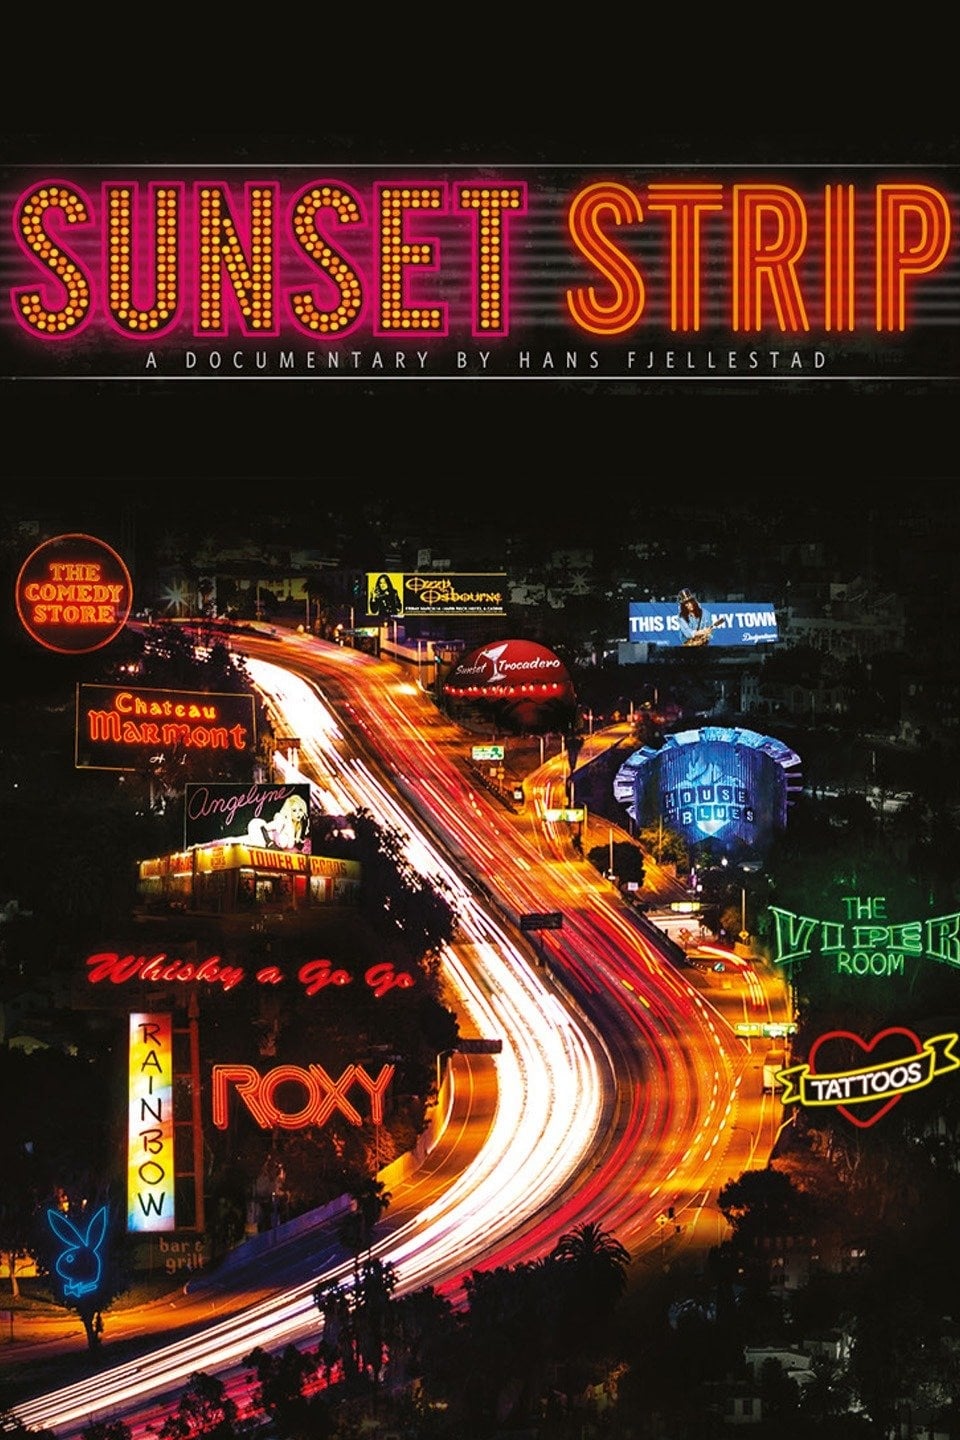 Sunset Strip (2012)